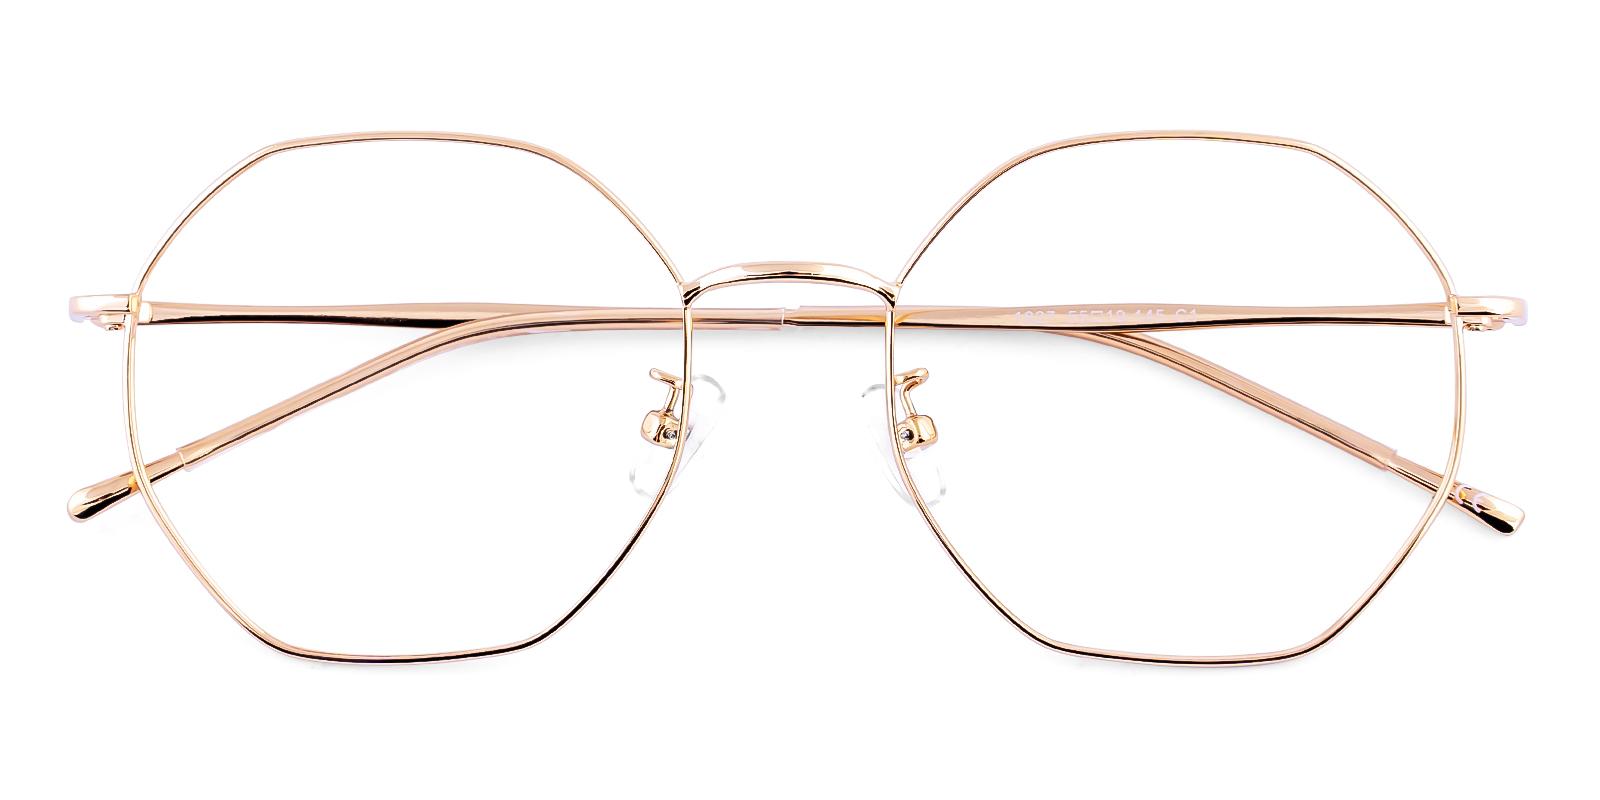 Salieur Rosegold Metal Eyeglasses , NosePads Frames from ABBE Glasses